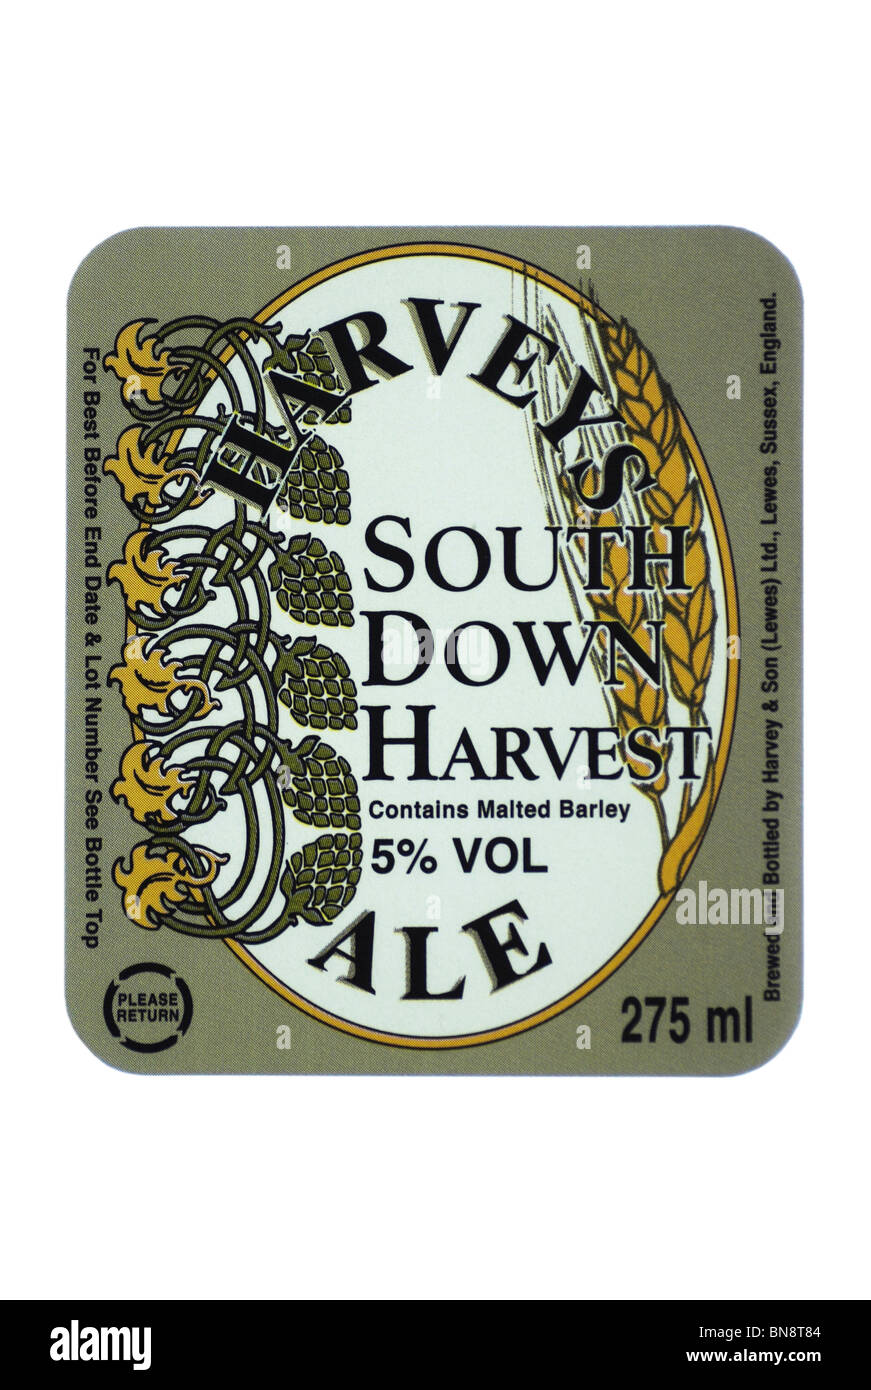 "Harveys" South Downs Harvest Ale in Flaschen Bier Label - Label aktuelle @ 2009. Stockfoto